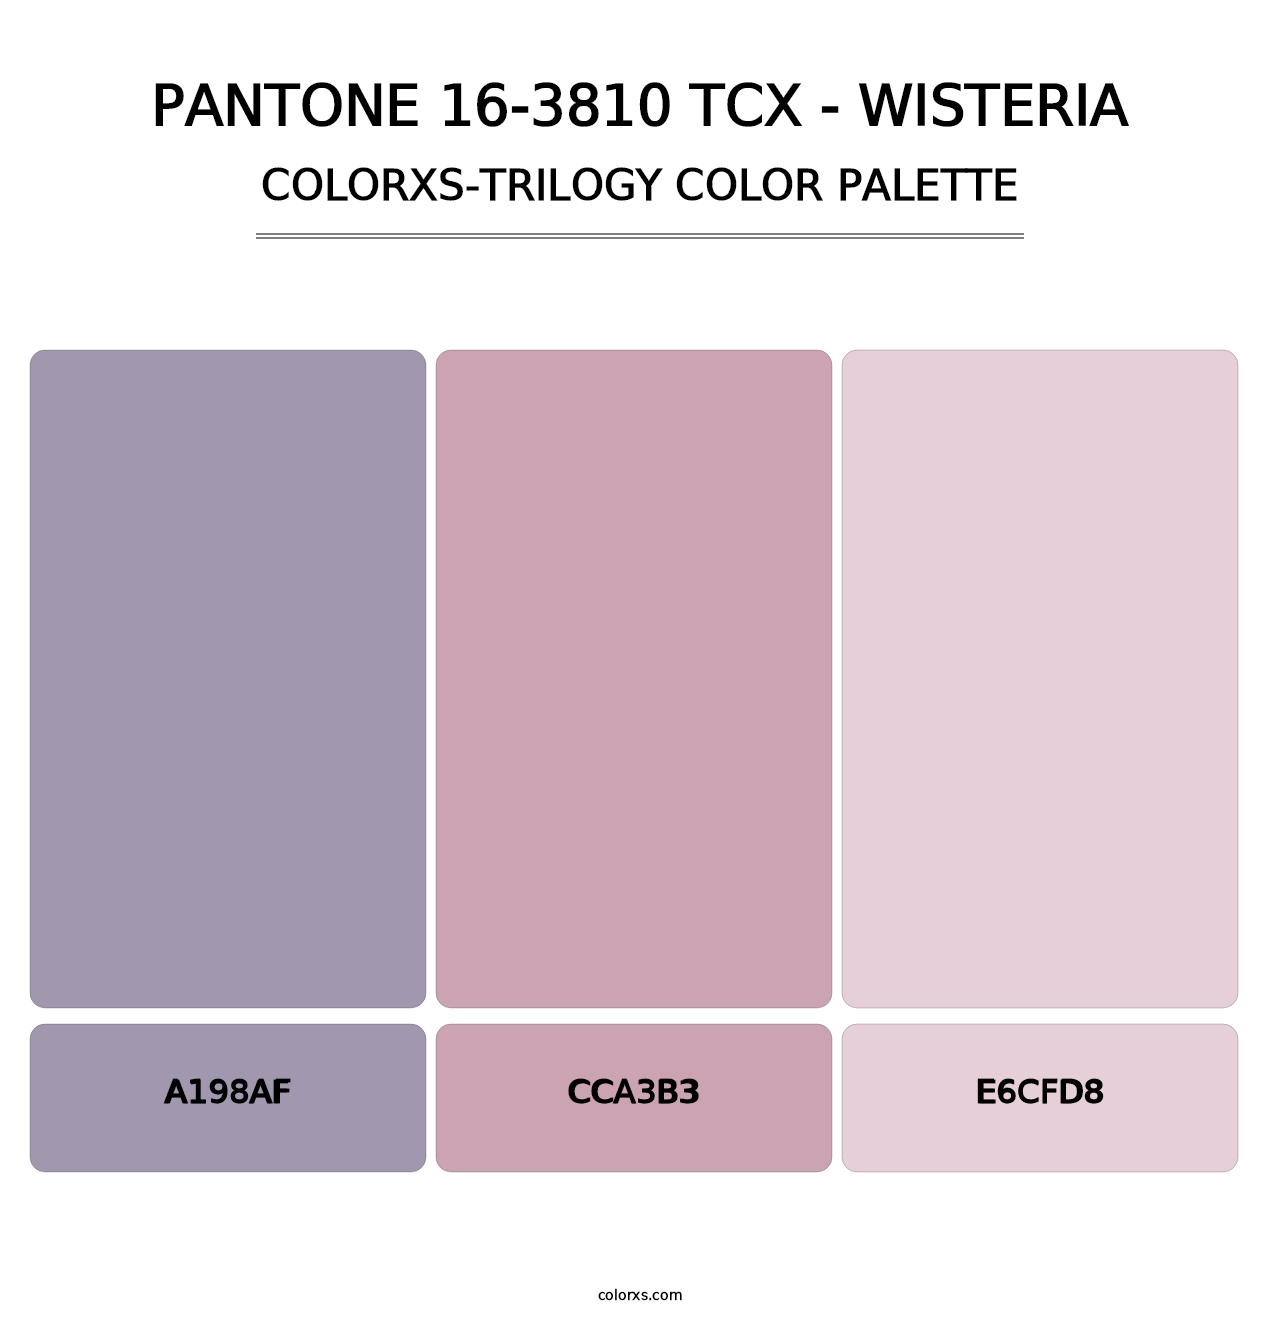 PANTONE 16-3810 TCX - Wisteria - Colorxs Trilogy Palette